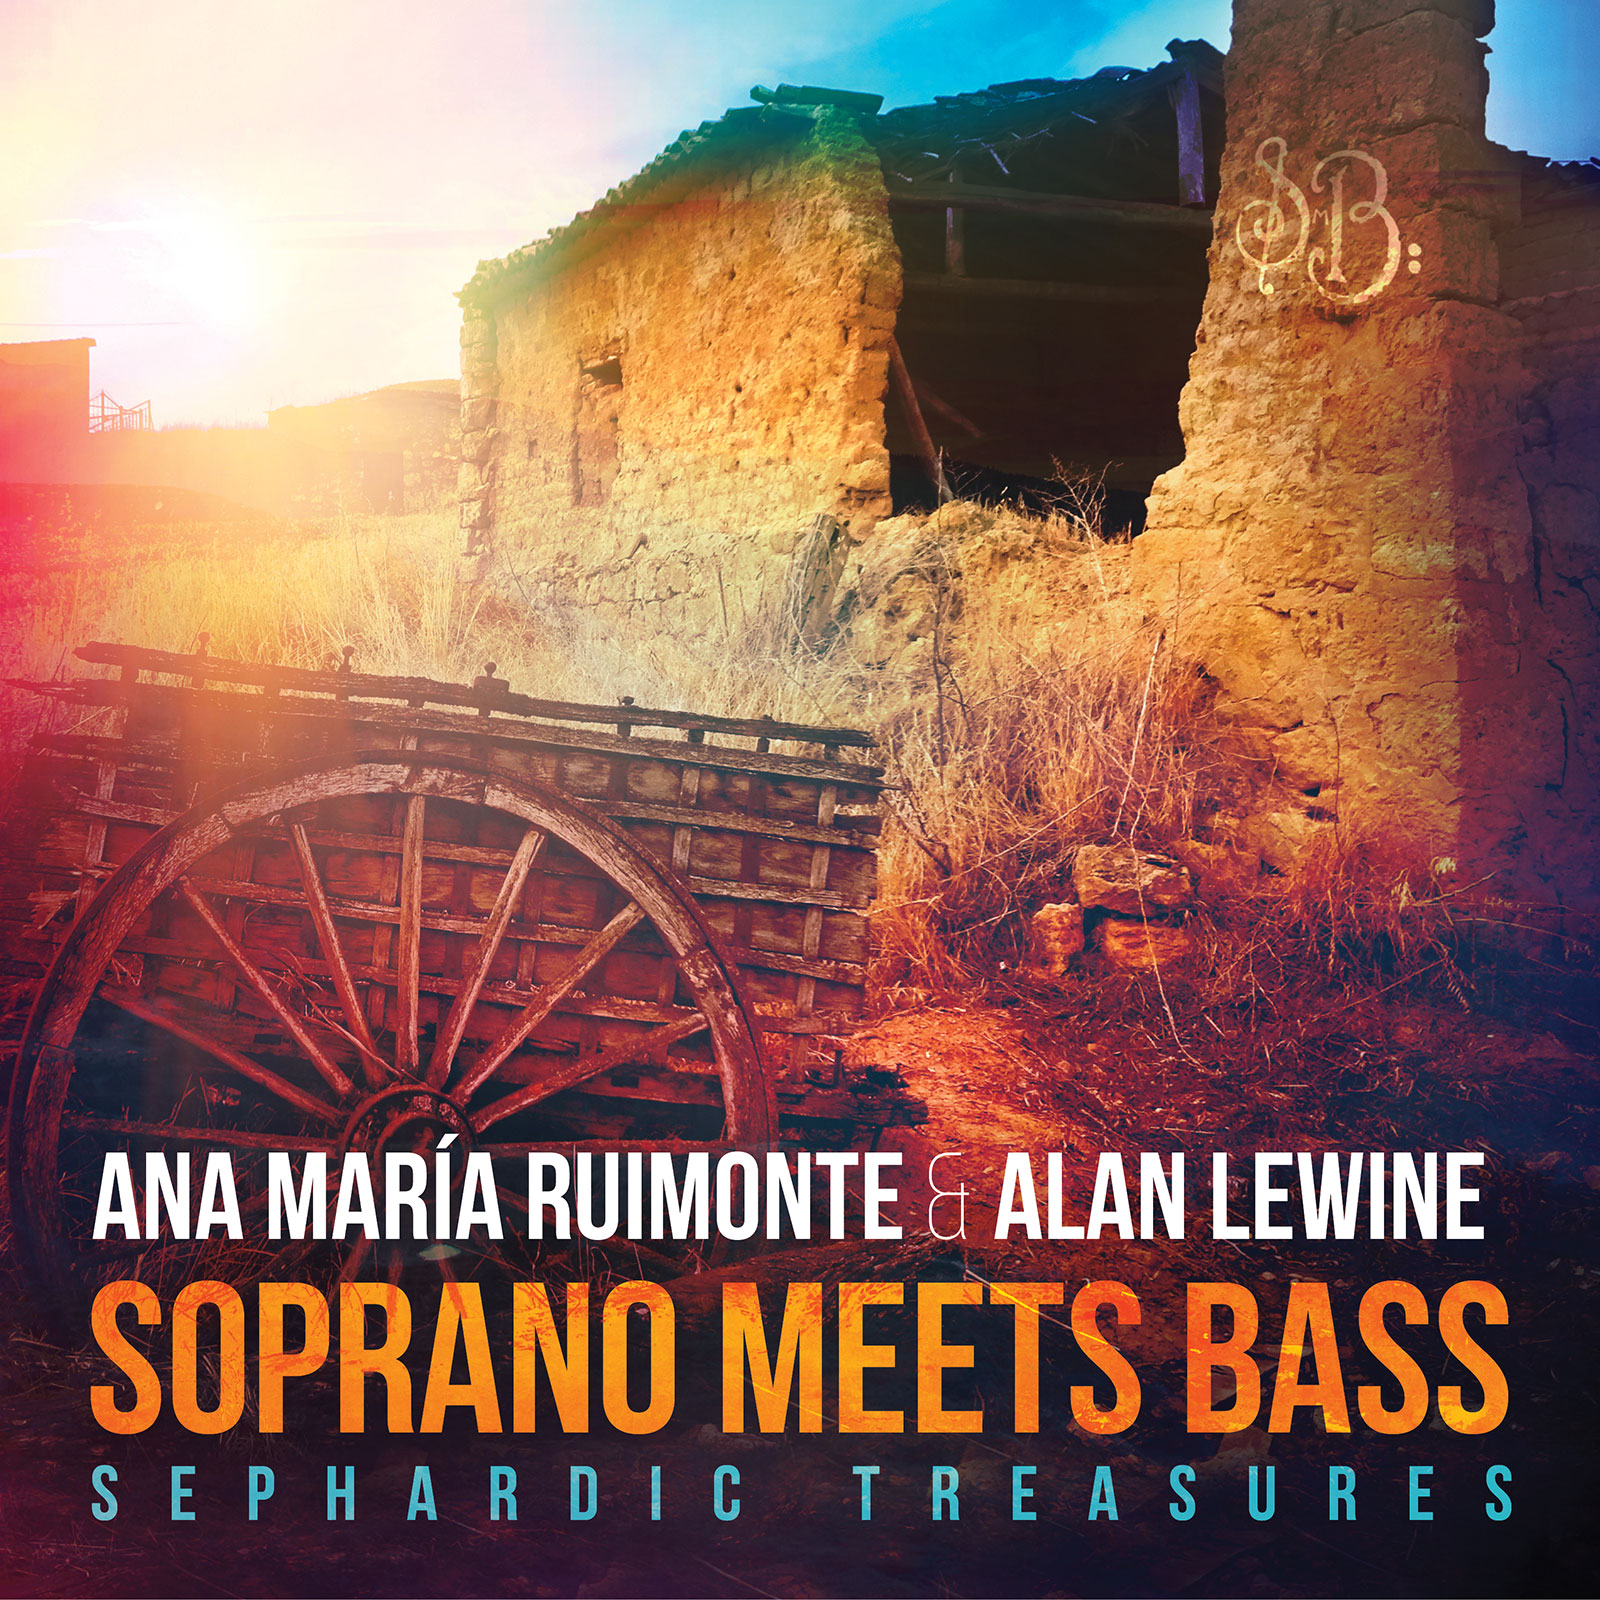 Soprano Meets Bass – Sephardic Treasures